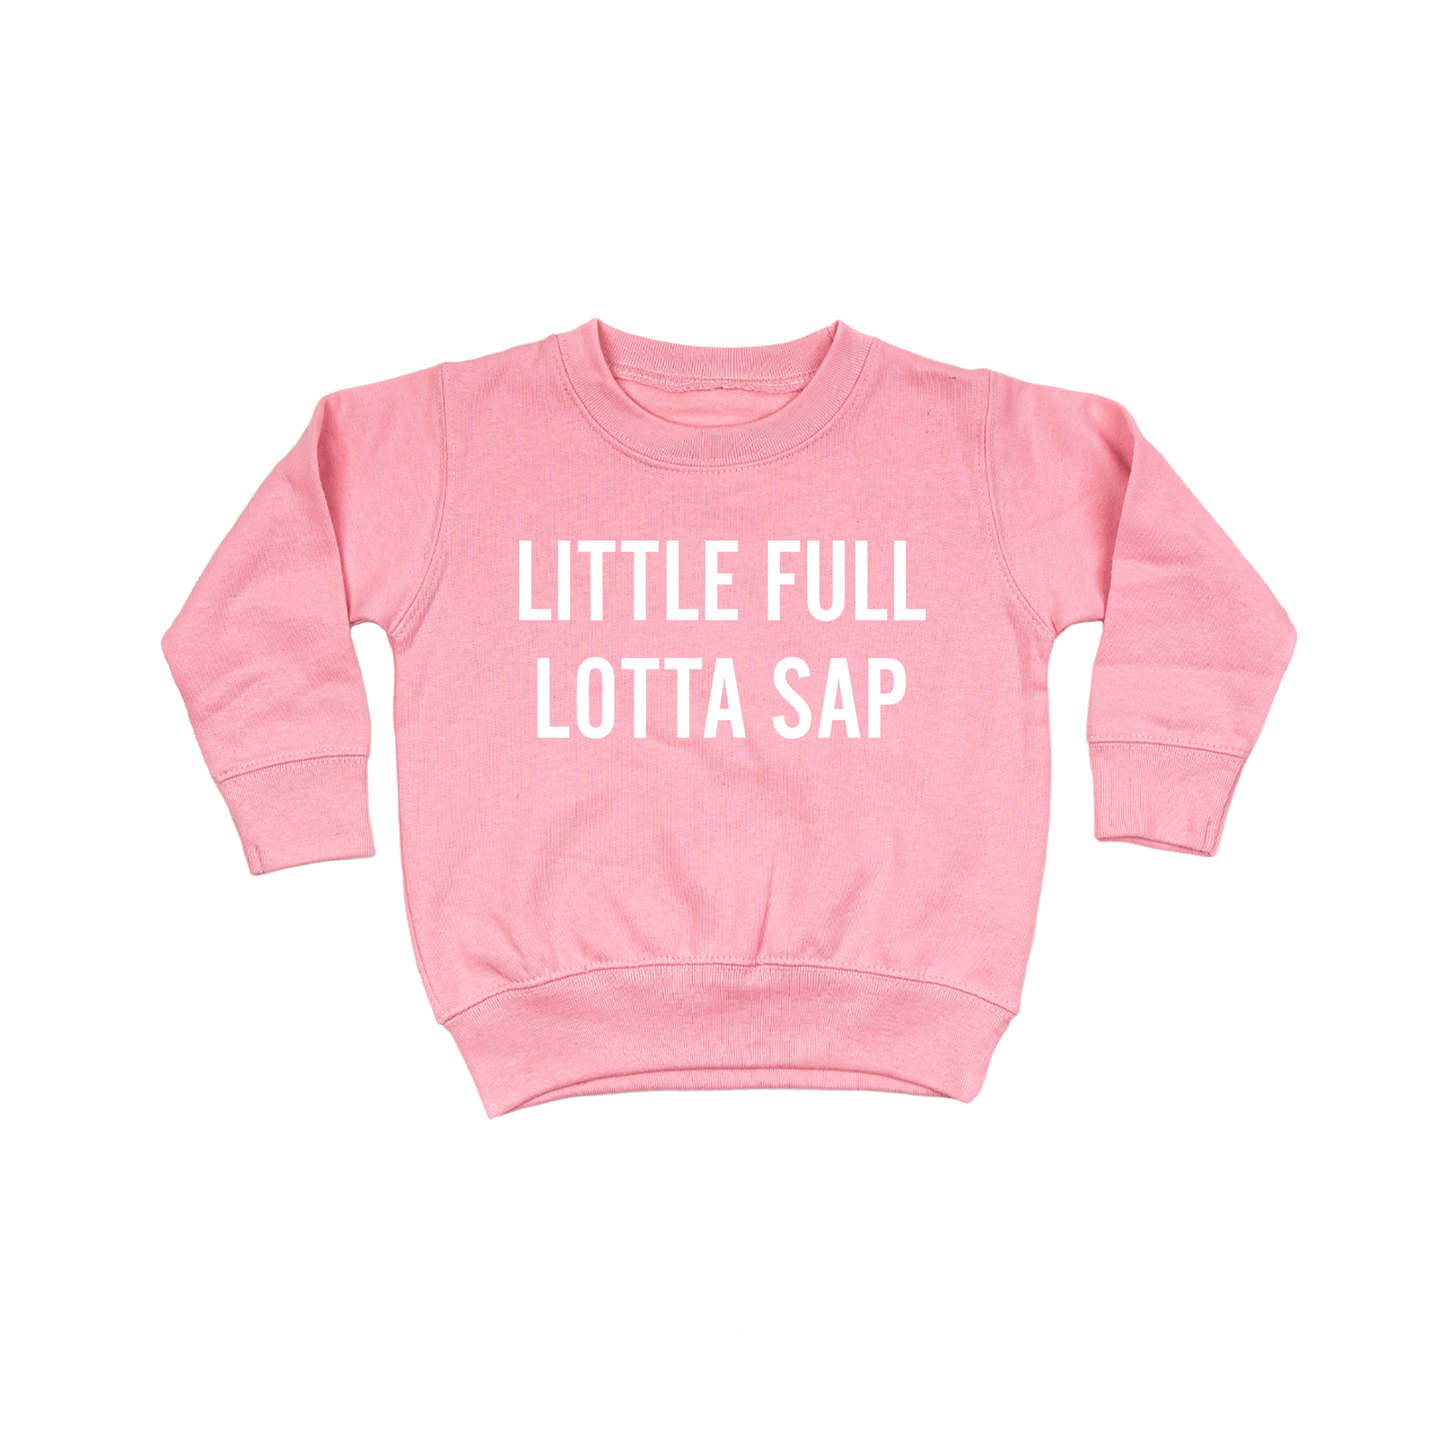 Little Full Lotta Sap (White) - Kids Sweatshirt (Pink)